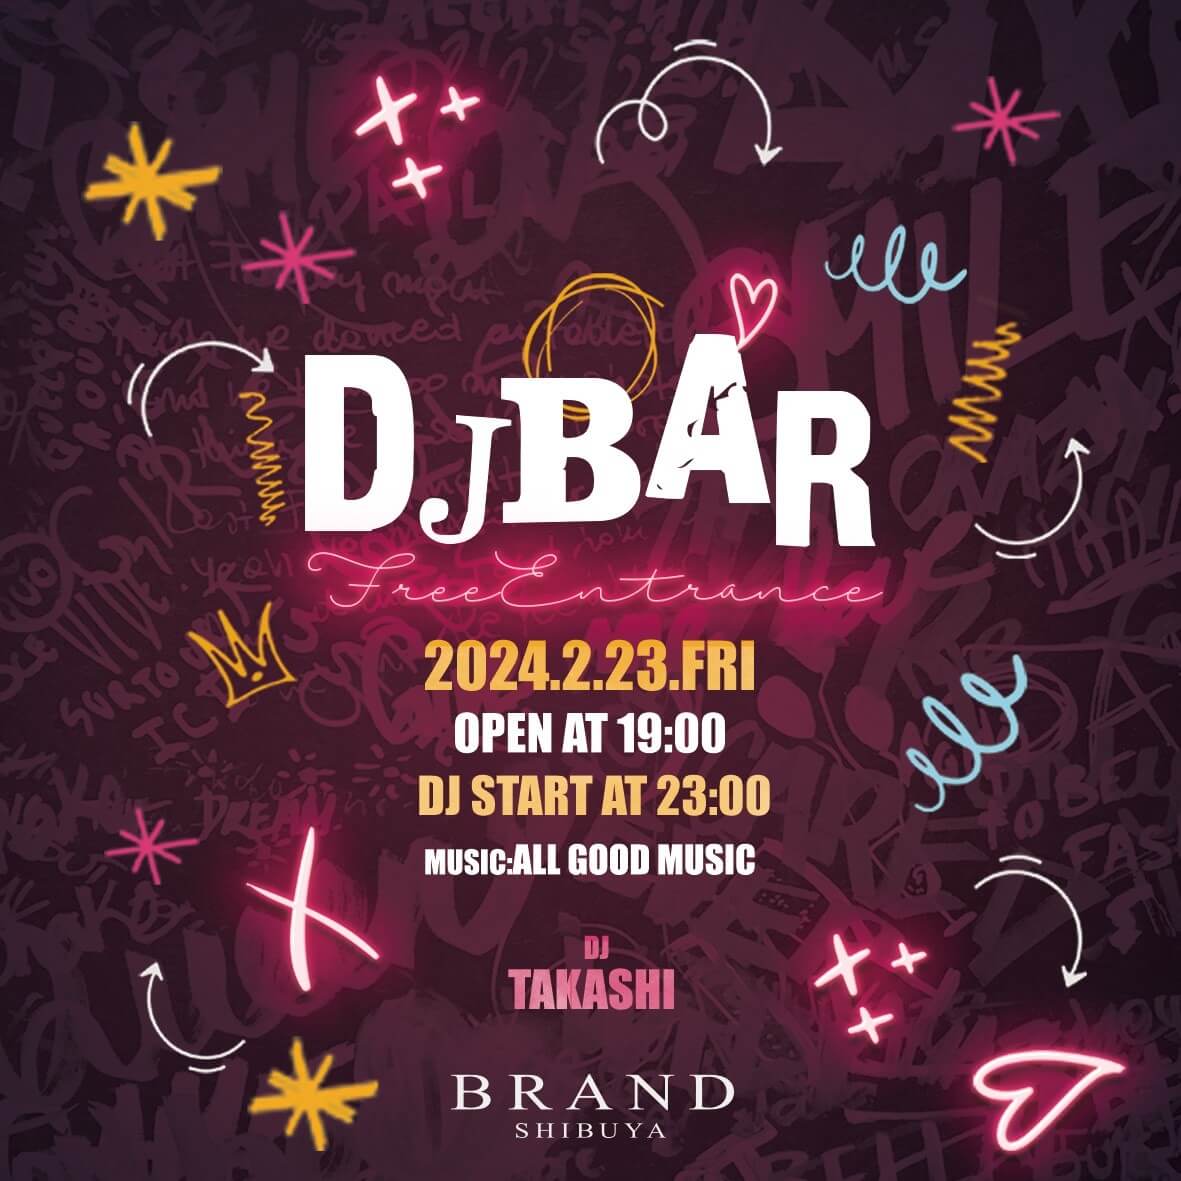 DJBAR 2024年02月23日（金曜日）に渋谷 クラブのBRAND SHIBUYAで開催されるALL MIXイベント